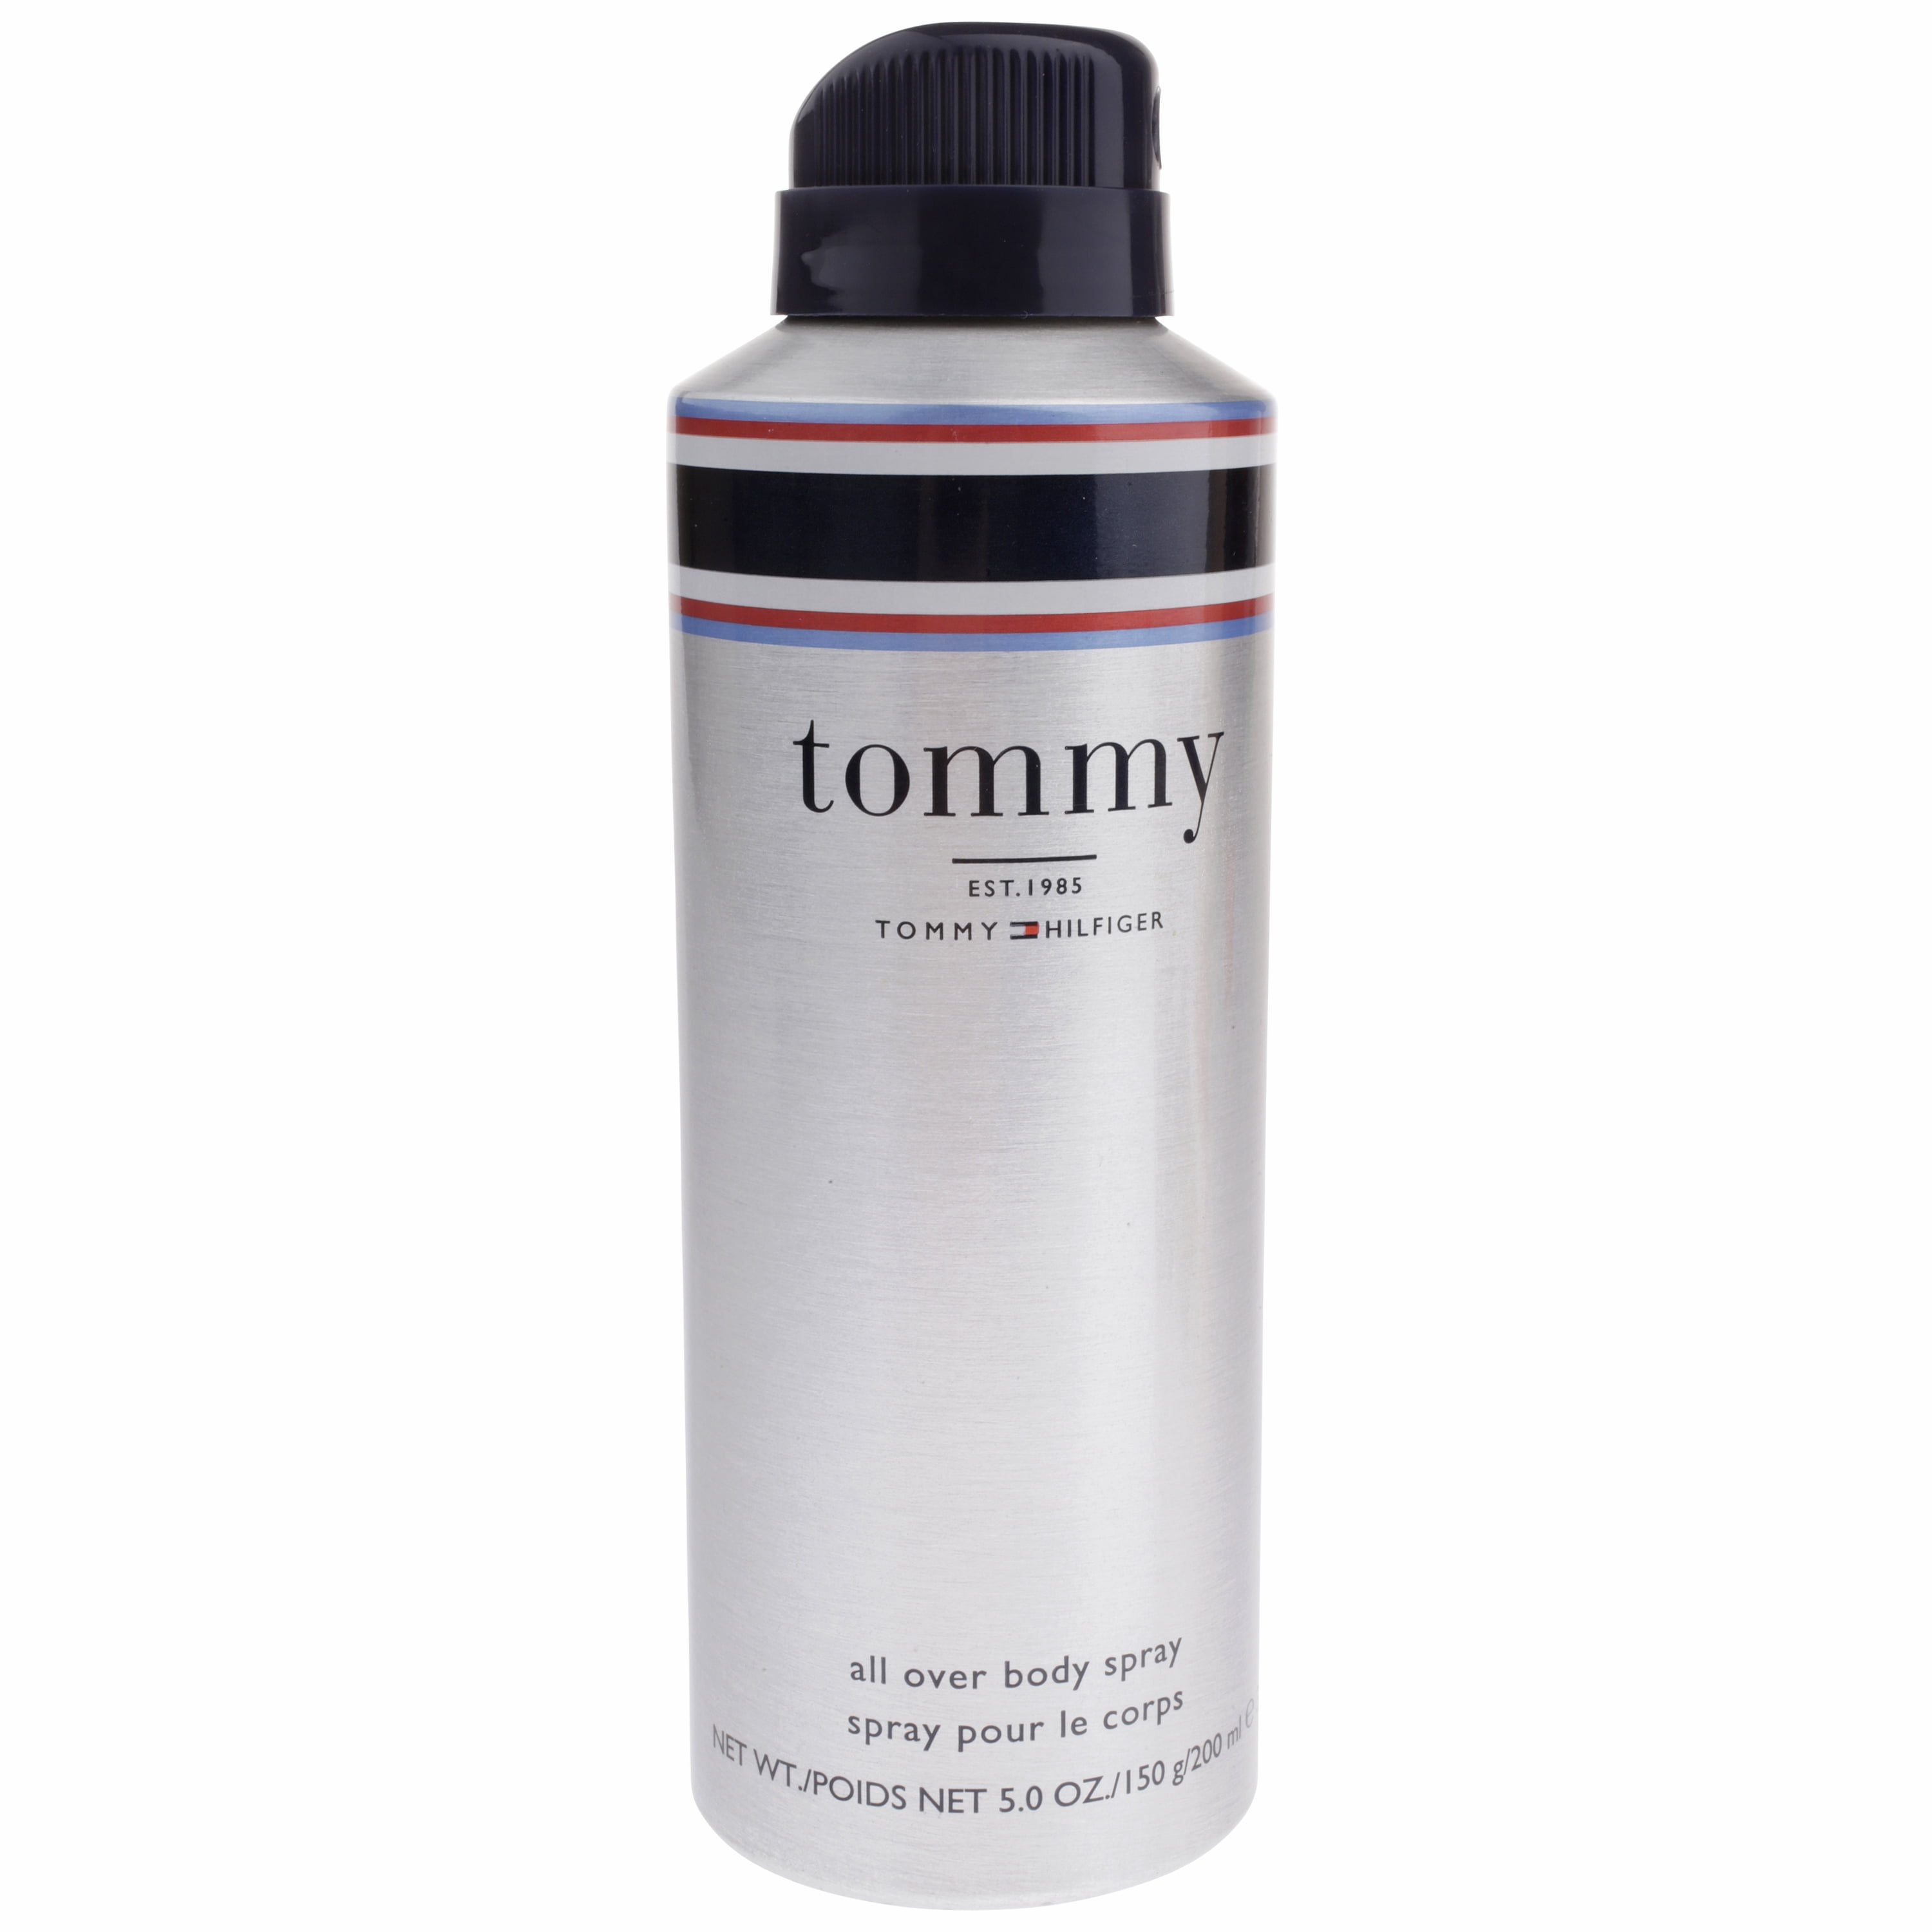 tommy deodorant spray